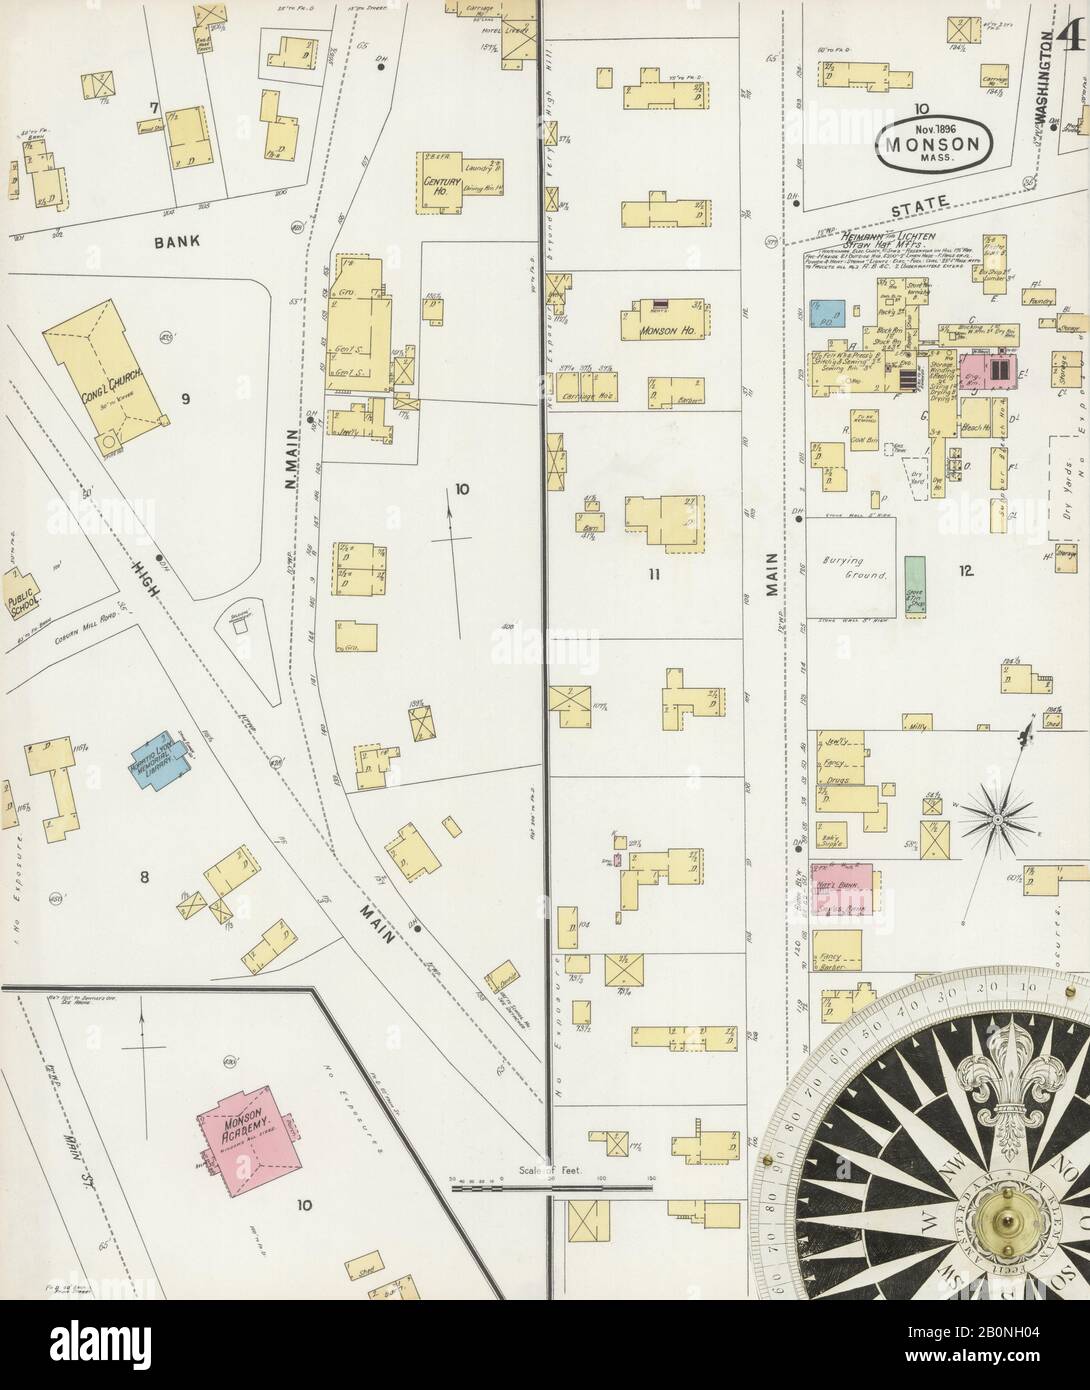 Bild 4 von Sanborn Fire Insurance Map aus Monson, Hampden County, Massachusetts. Nov. 4 Blatt(e), Amerika, Straßenkarte mit einem Kompass Aus Dem 19. Jahrhundert Stockfoto